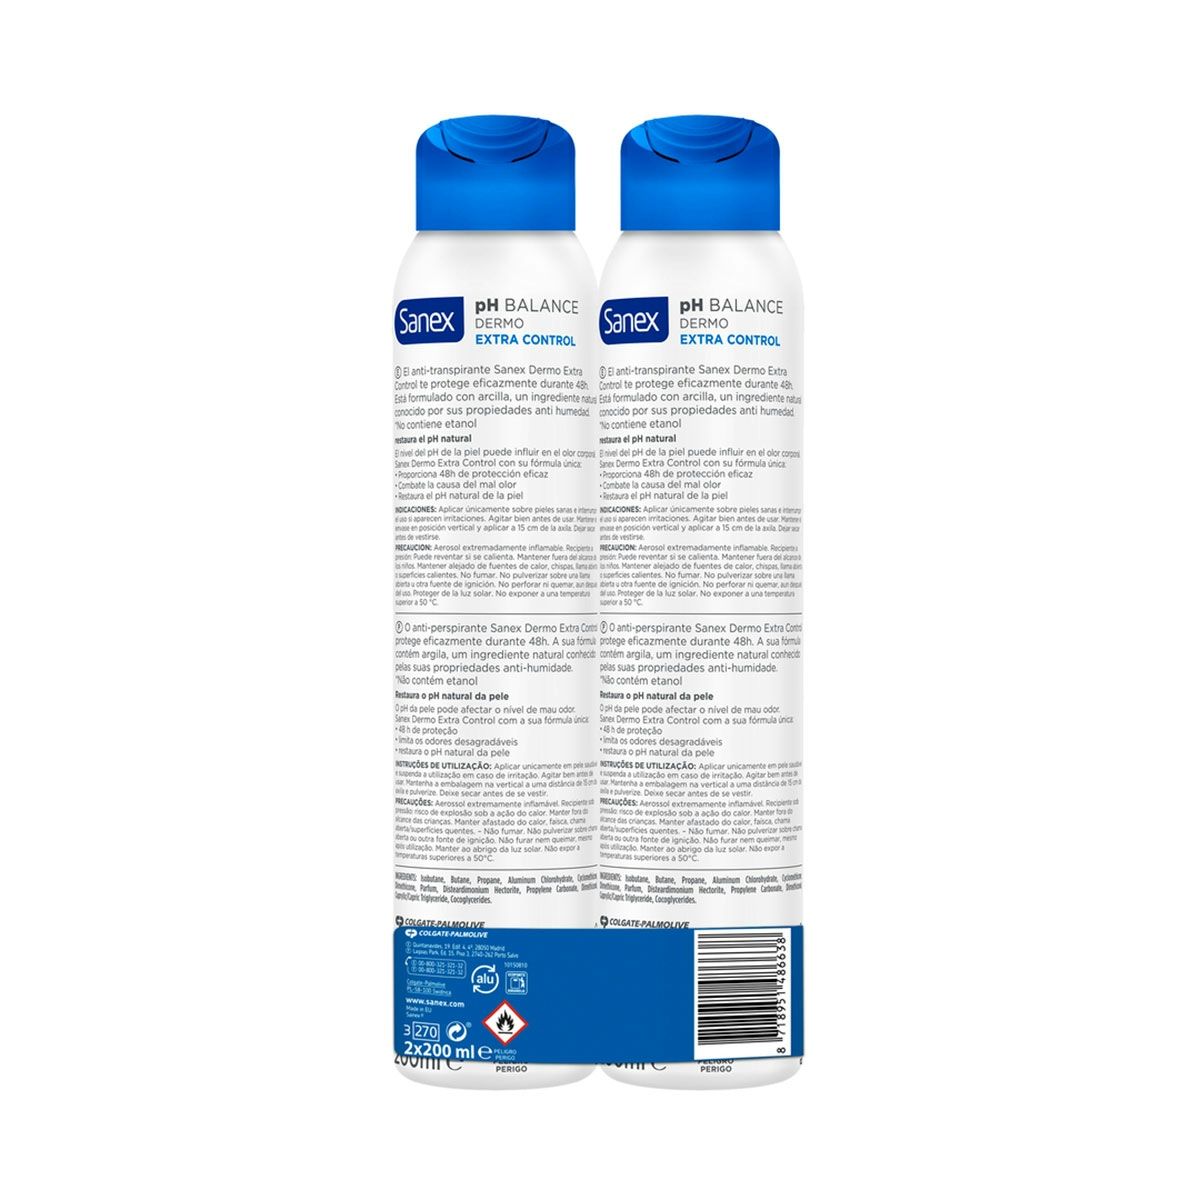 Desodorante spray Sanex pH Balance Dermo Extra Control 48h 2x200ml